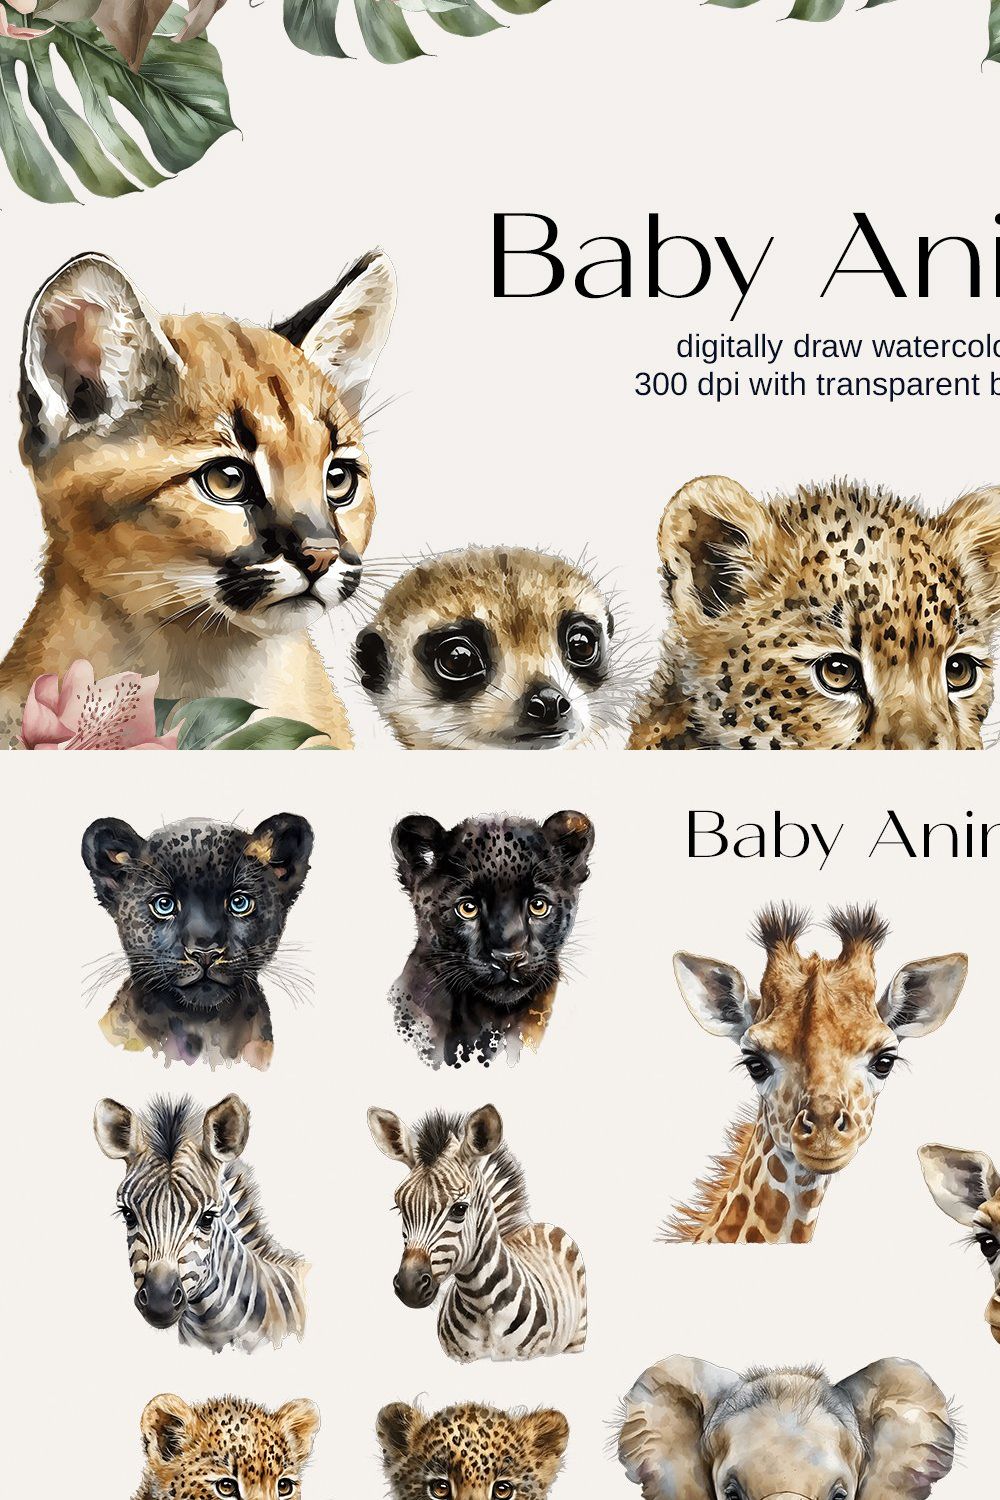 Watercolor Safari Baby Animals pinterest preview image.